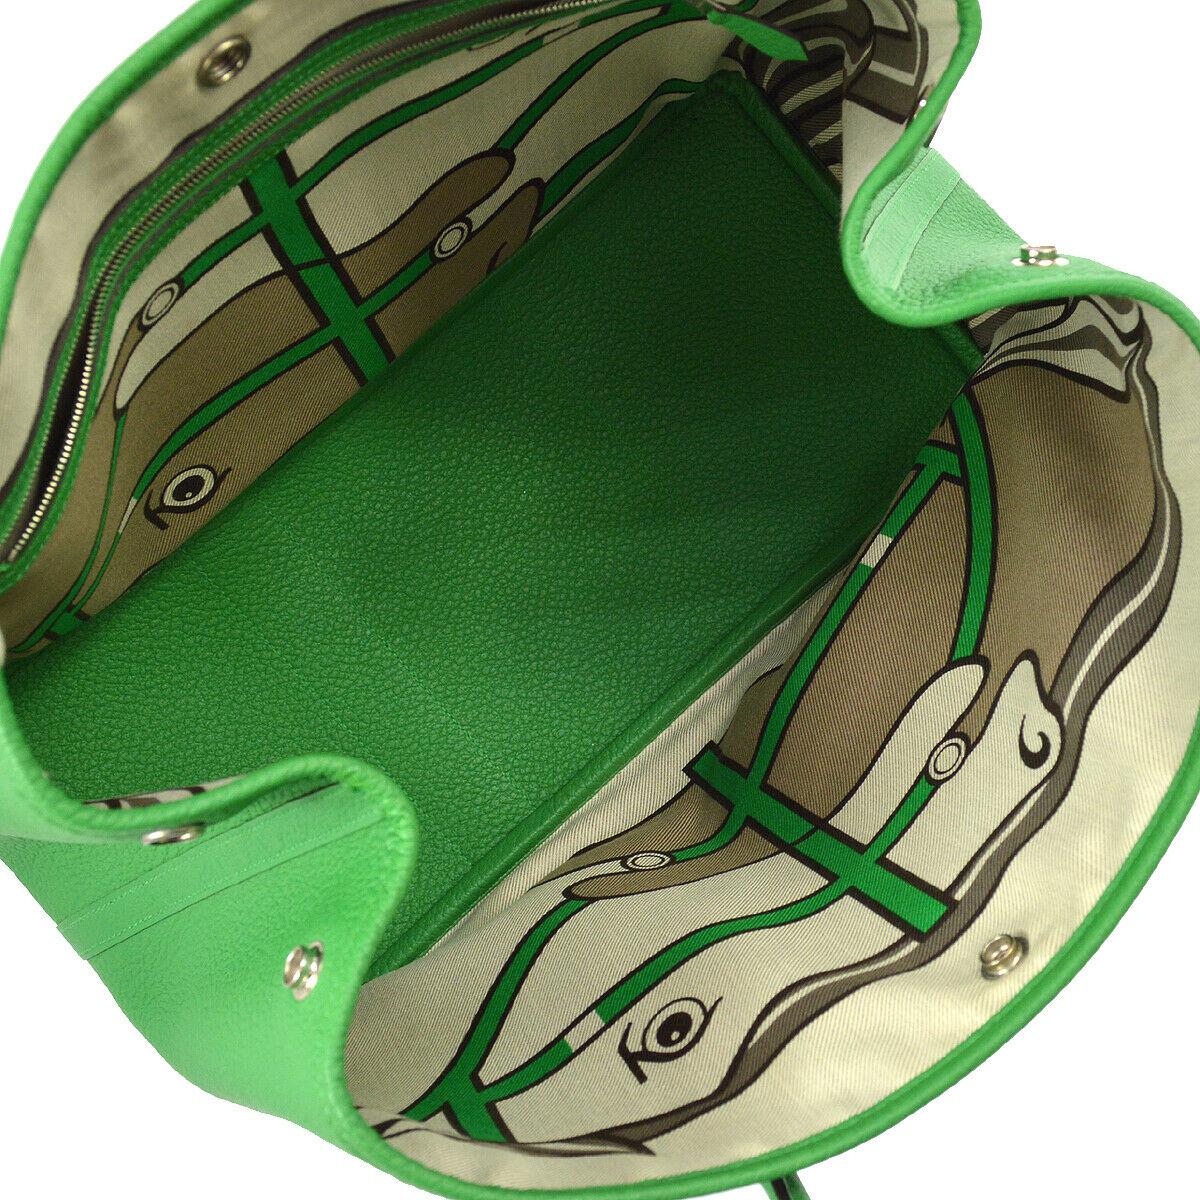 Hermes Green Leather Large Carryall Travel Garden Top Handle Satchel Tote Bag 2